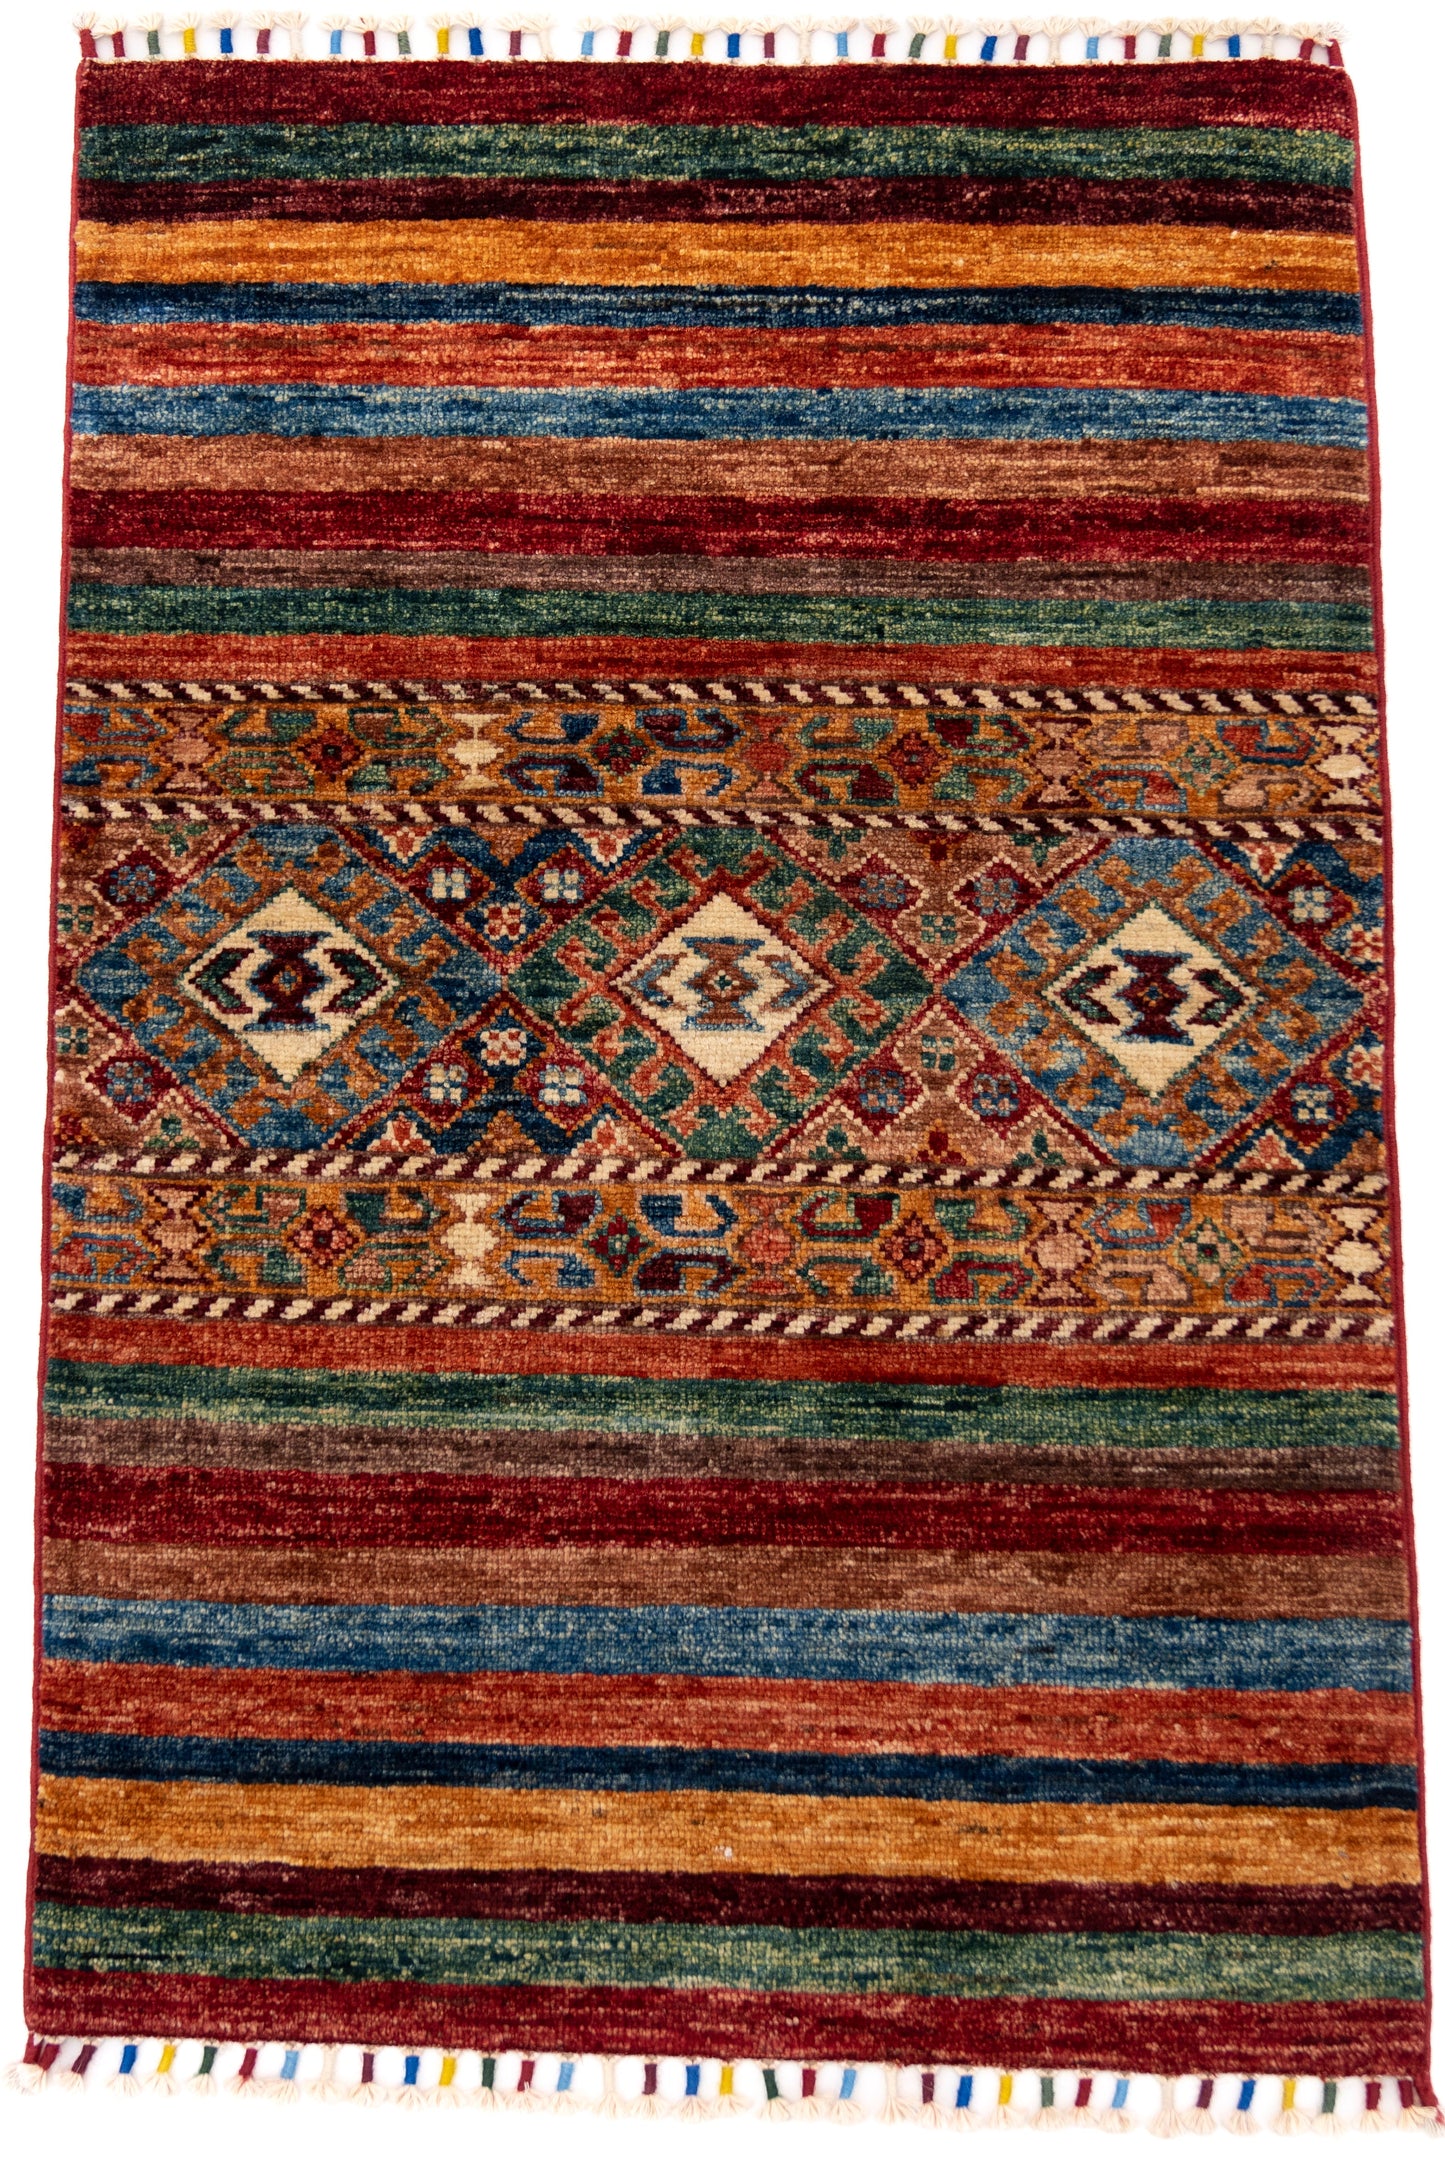 Multicoloured Striped Ariana Rubin Carpet with Multicoloured Tassels